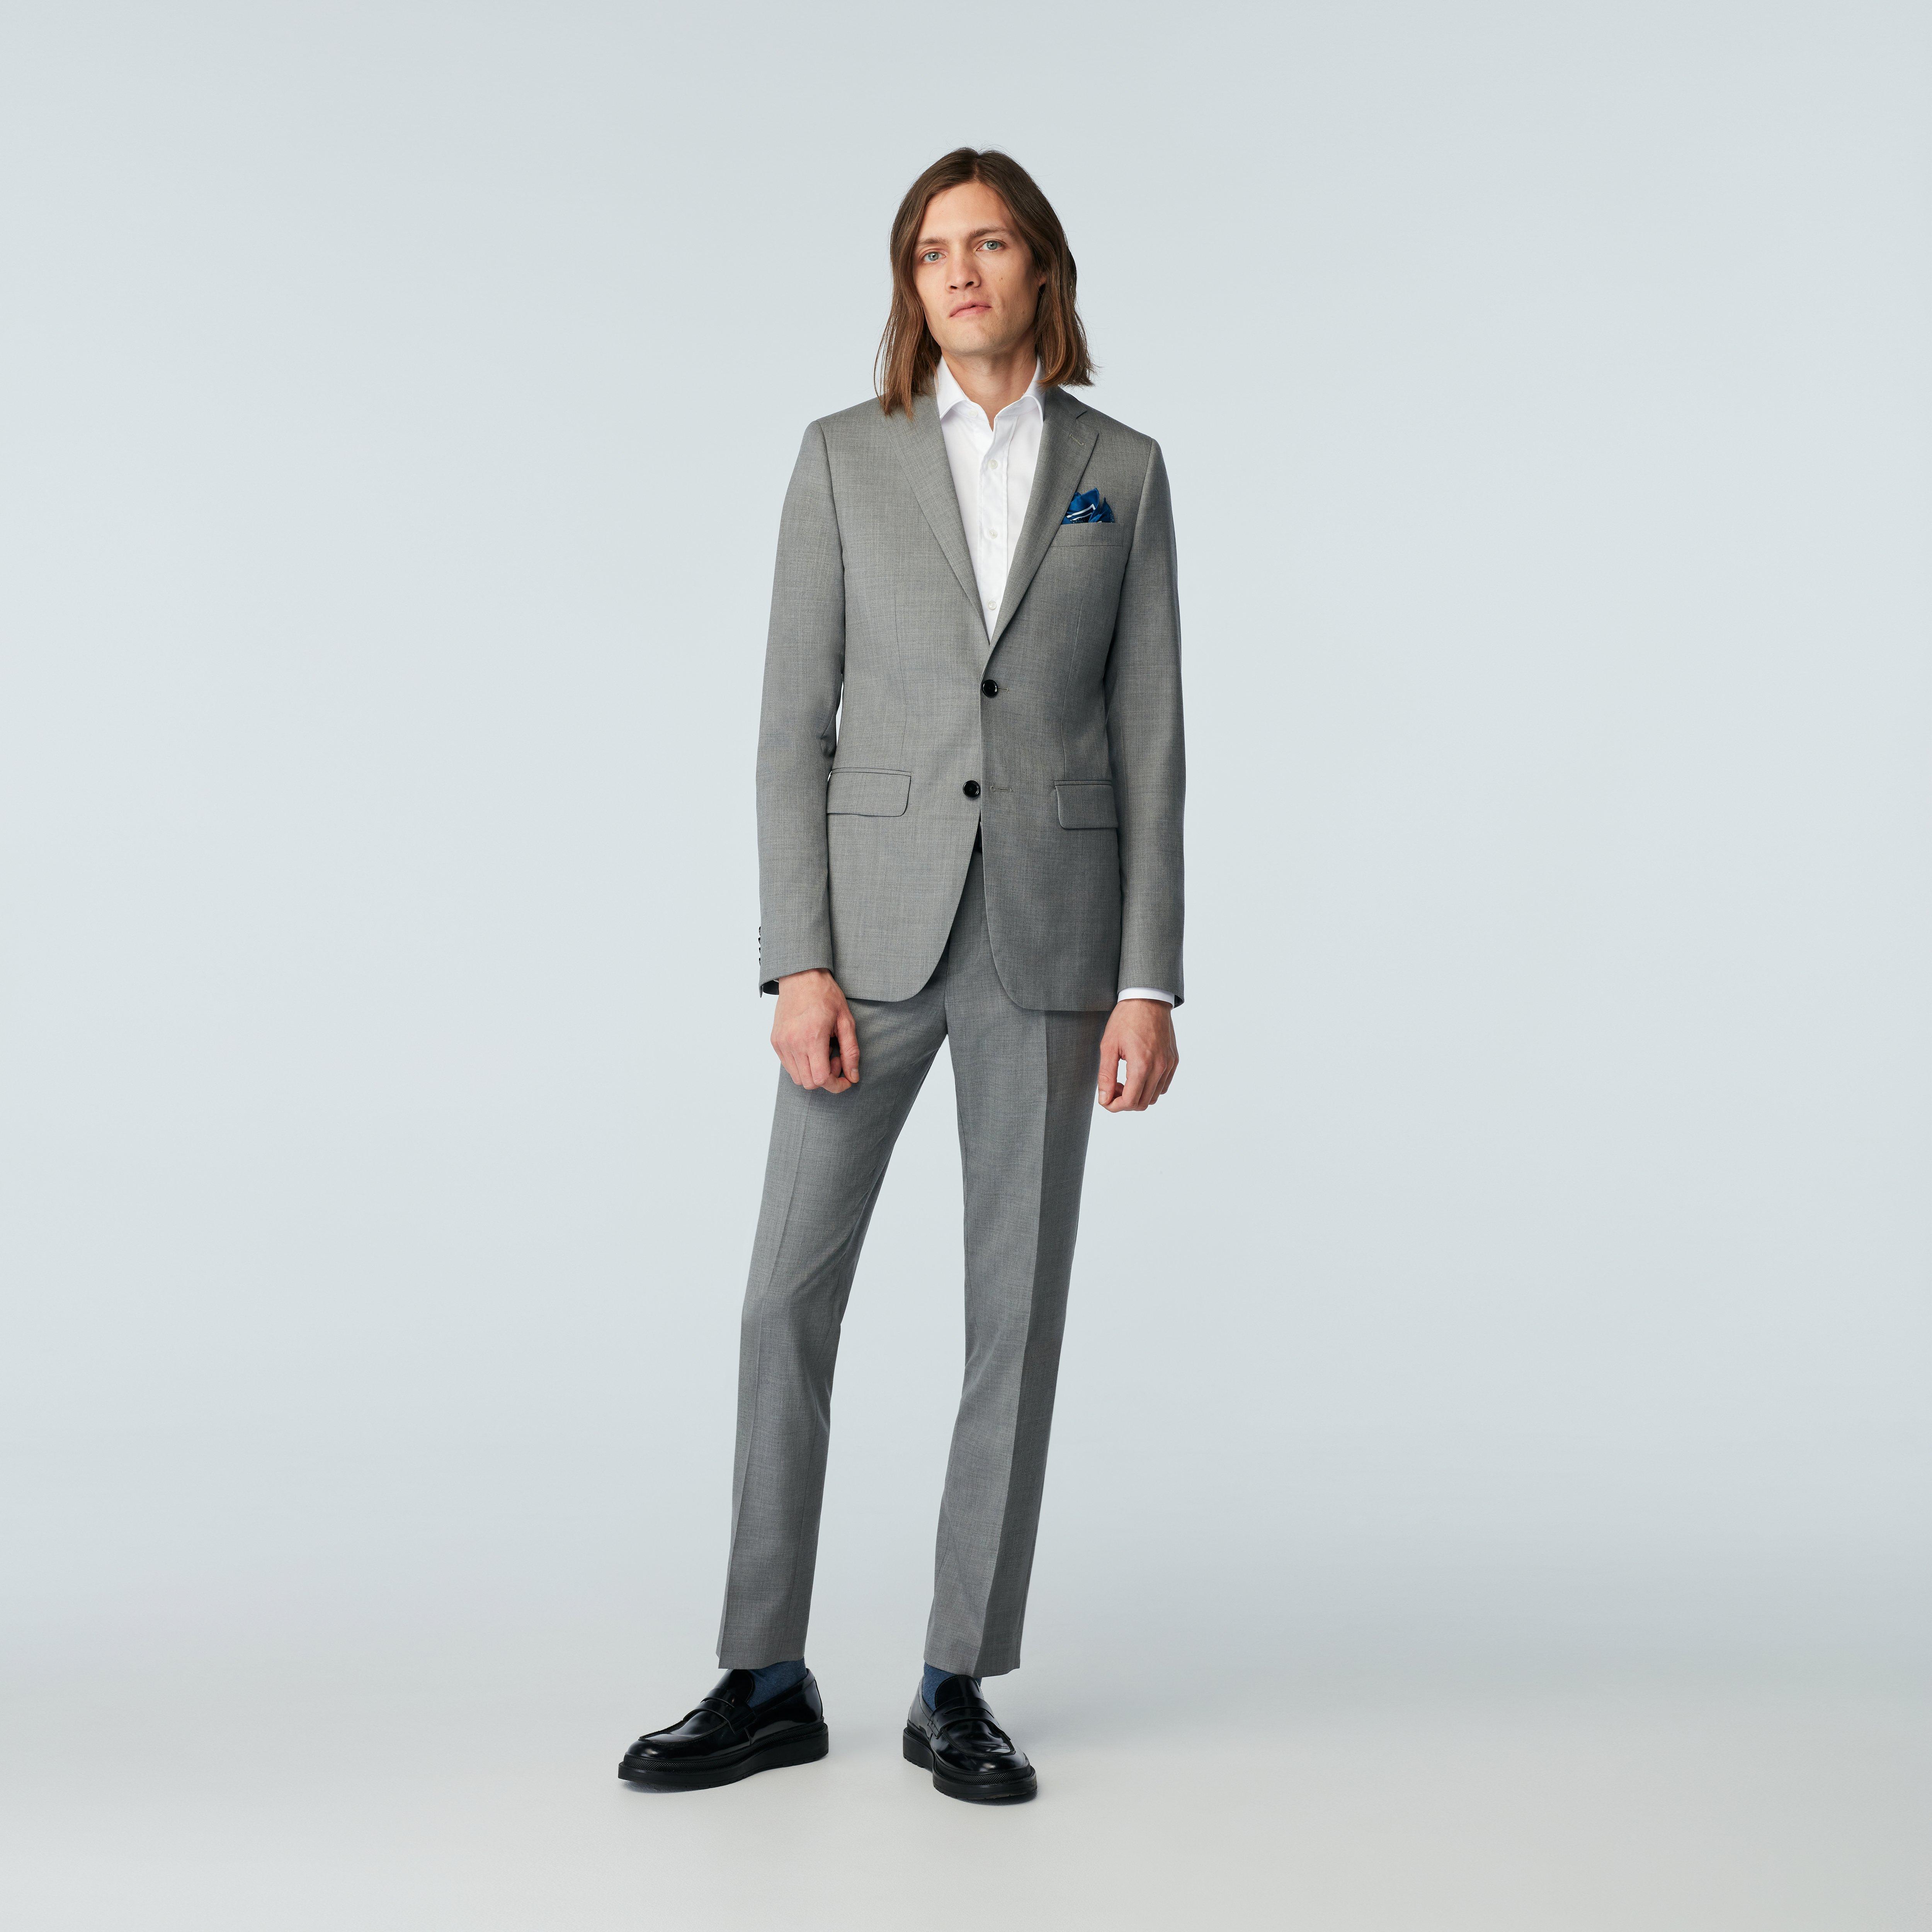 Luxury Suits - Men's Custom Suits